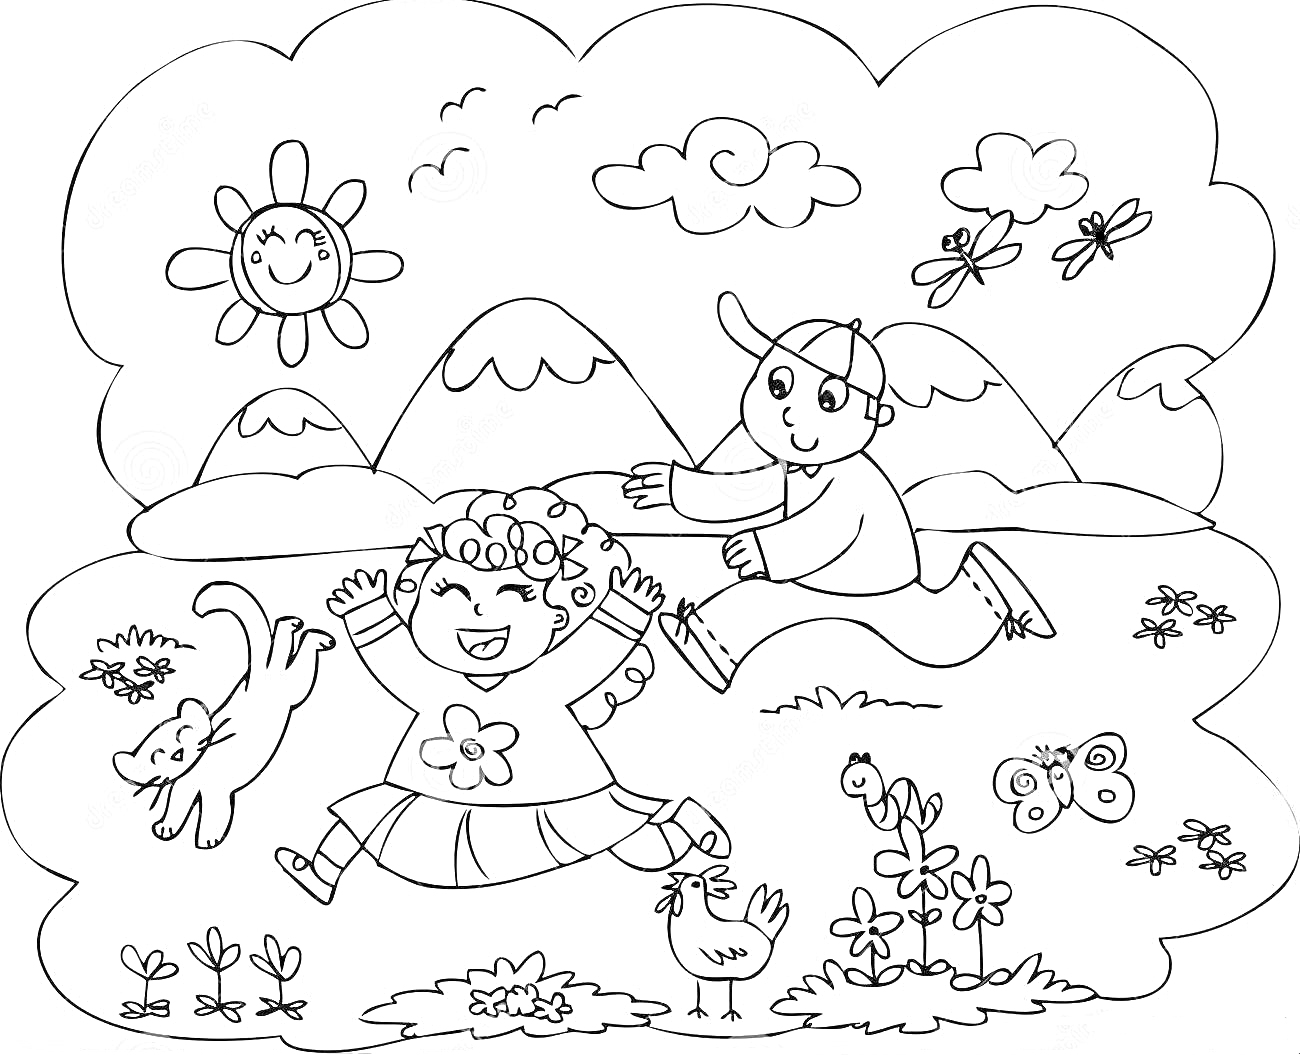 Раскраска Дети, кошка, курица, цветы, бабочки и стрекозы на поляне с горами на фоне и улыбающимся солнцем